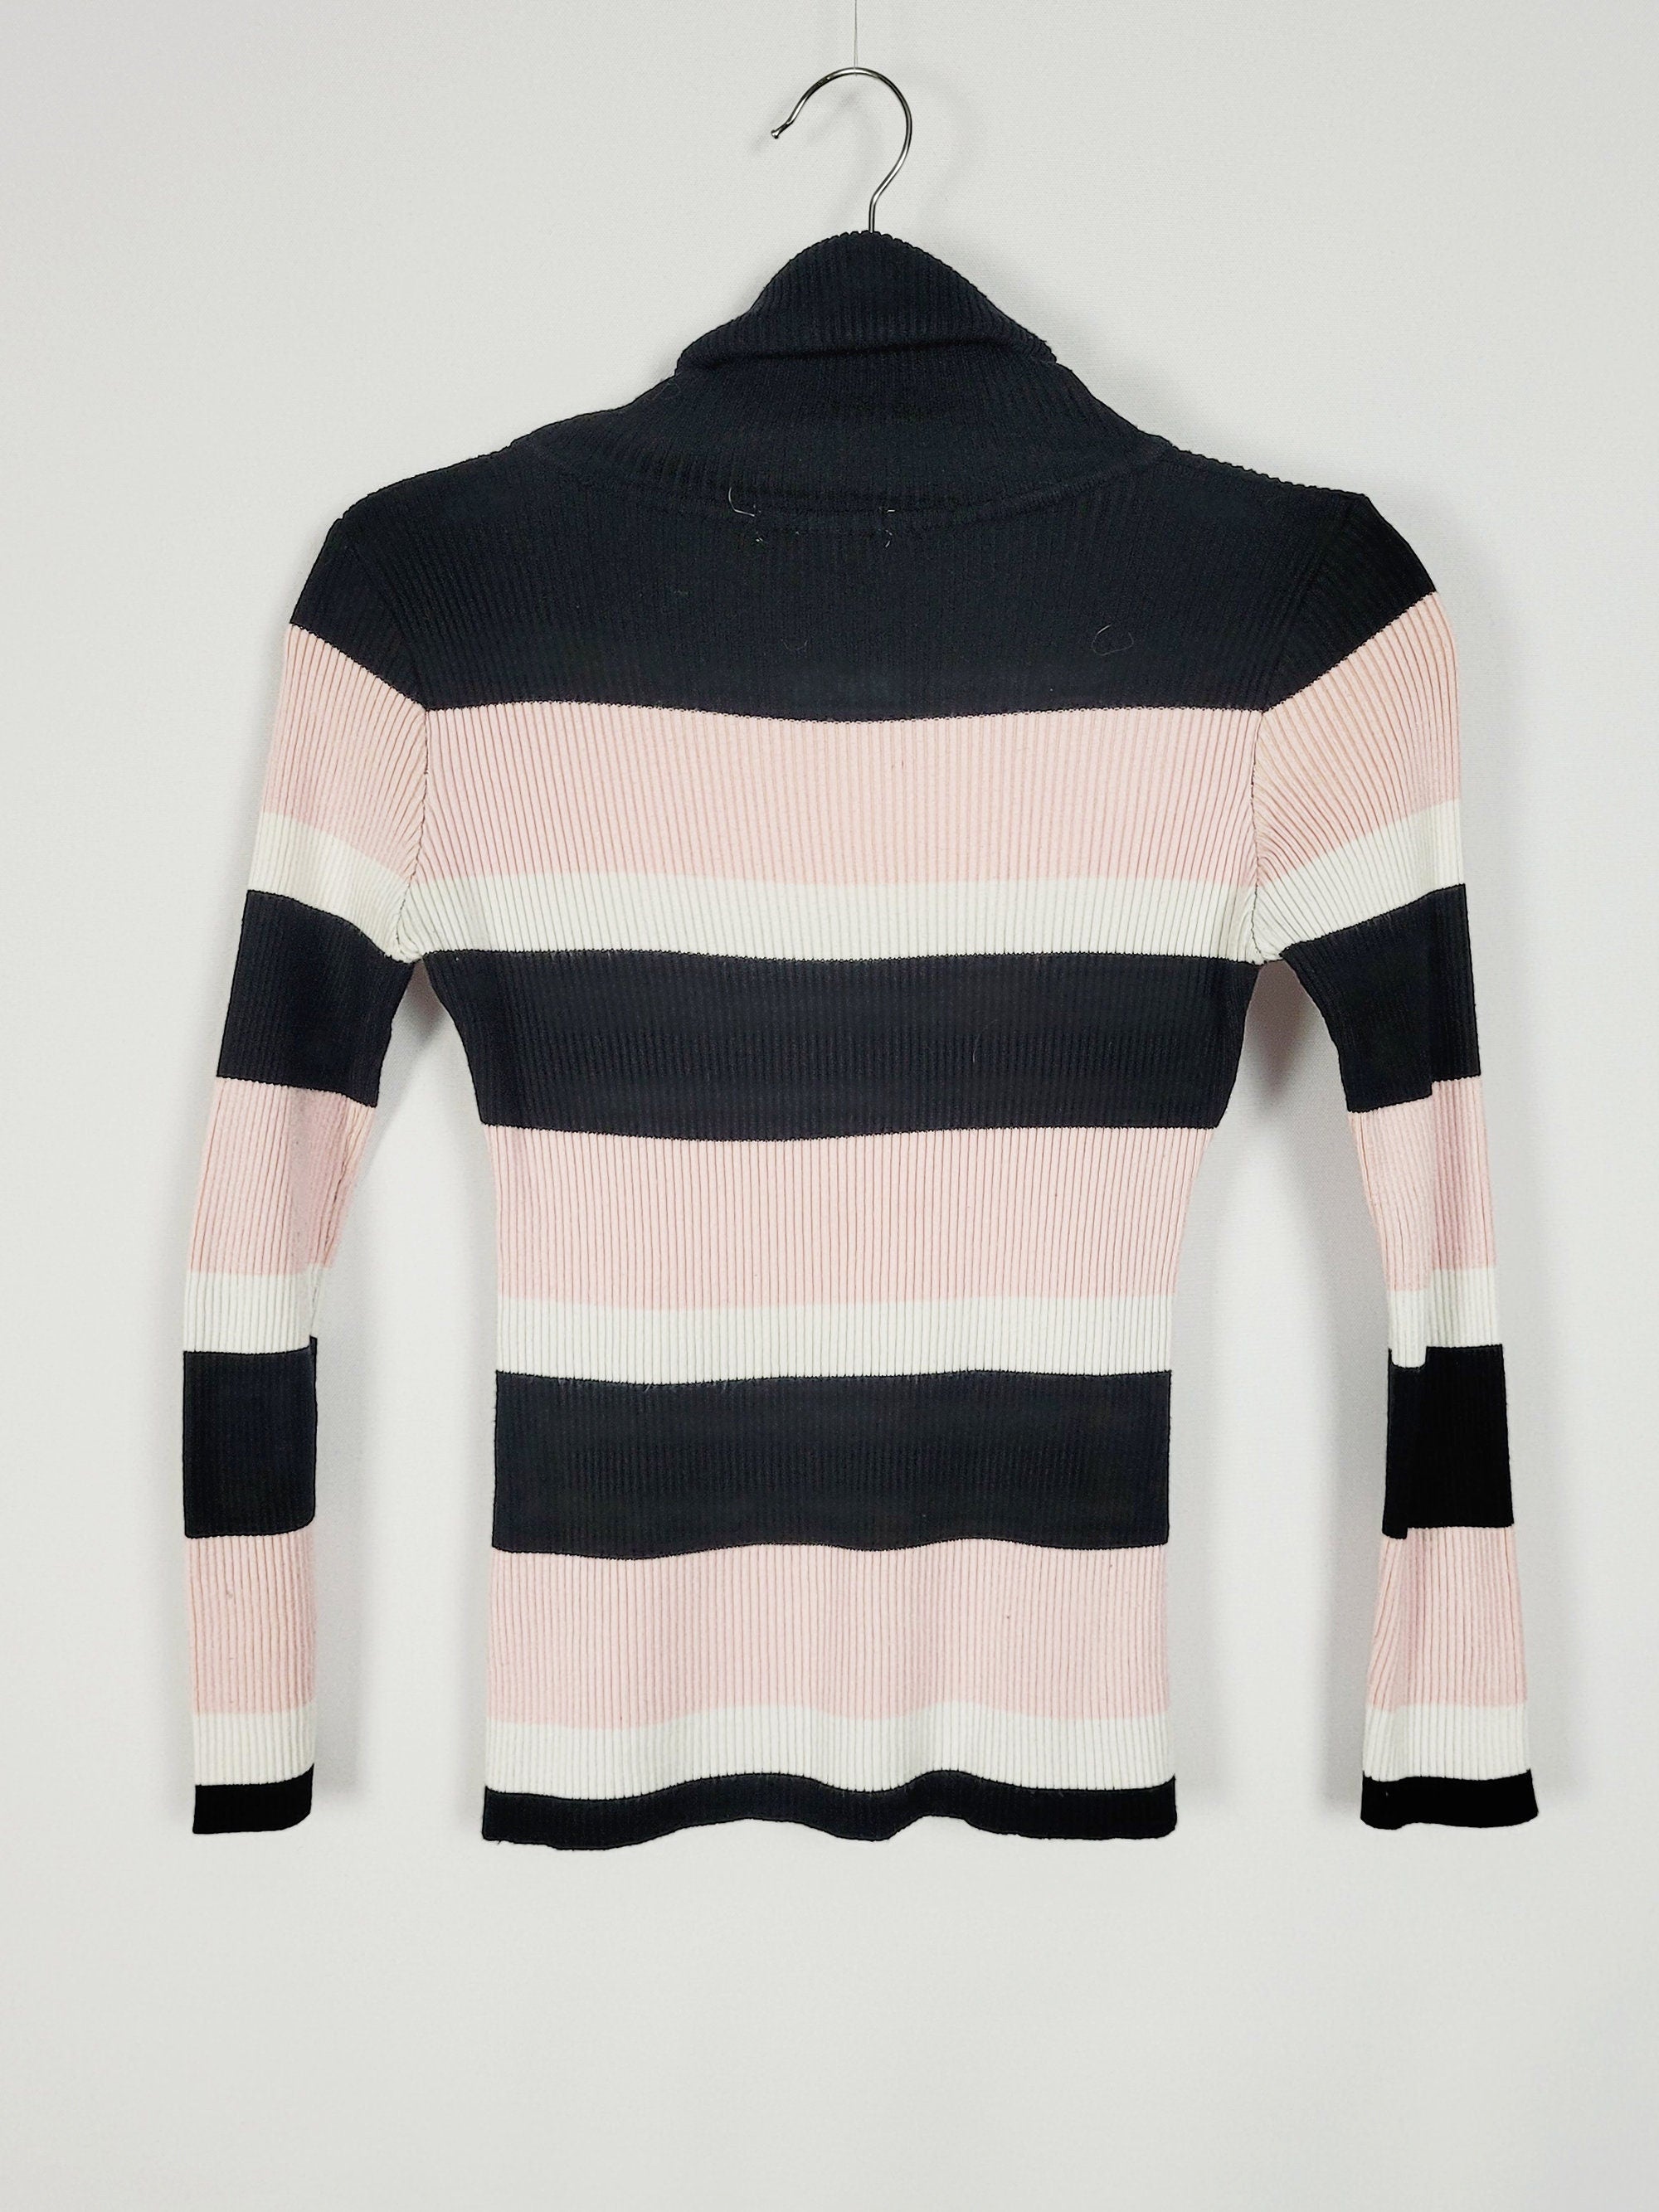 90s minimalist striped turtleneck grunge sweater top